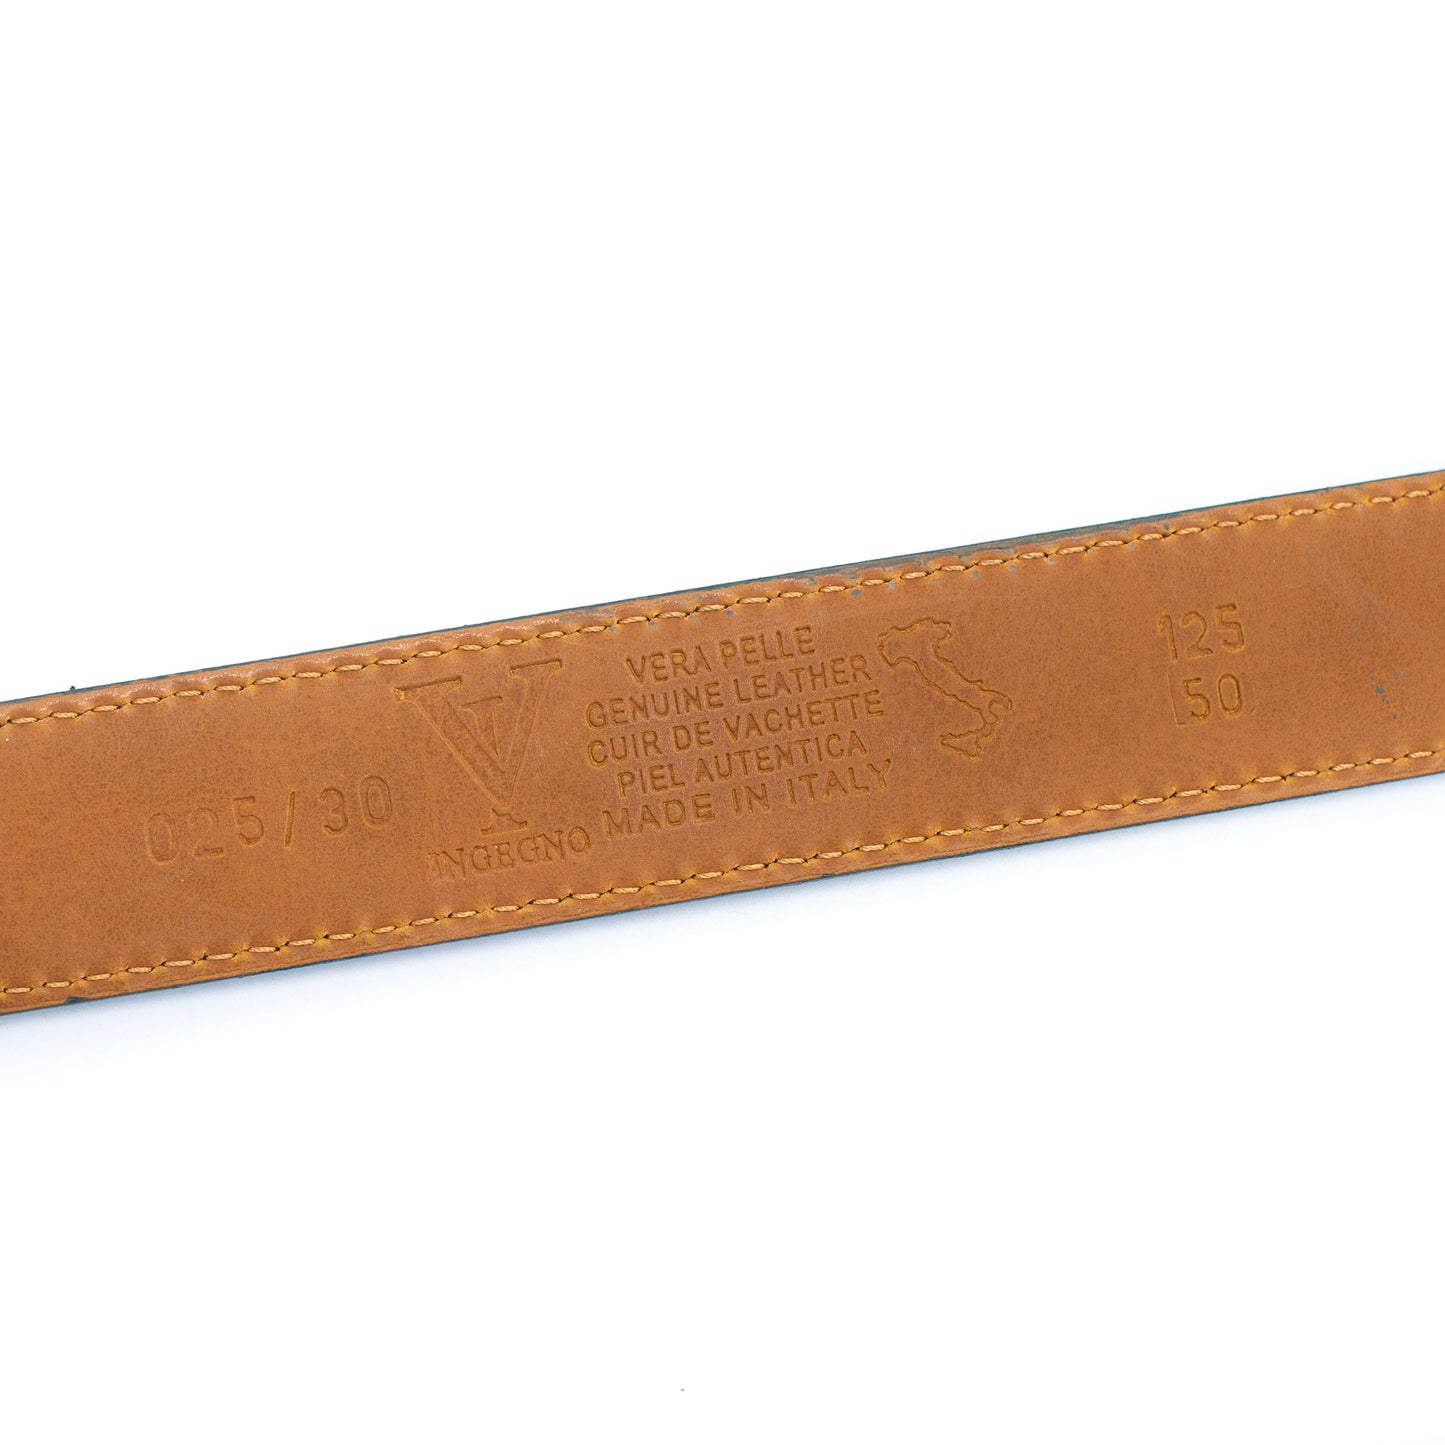 Made in Italy Genuine leather women Belt LEL-11-A